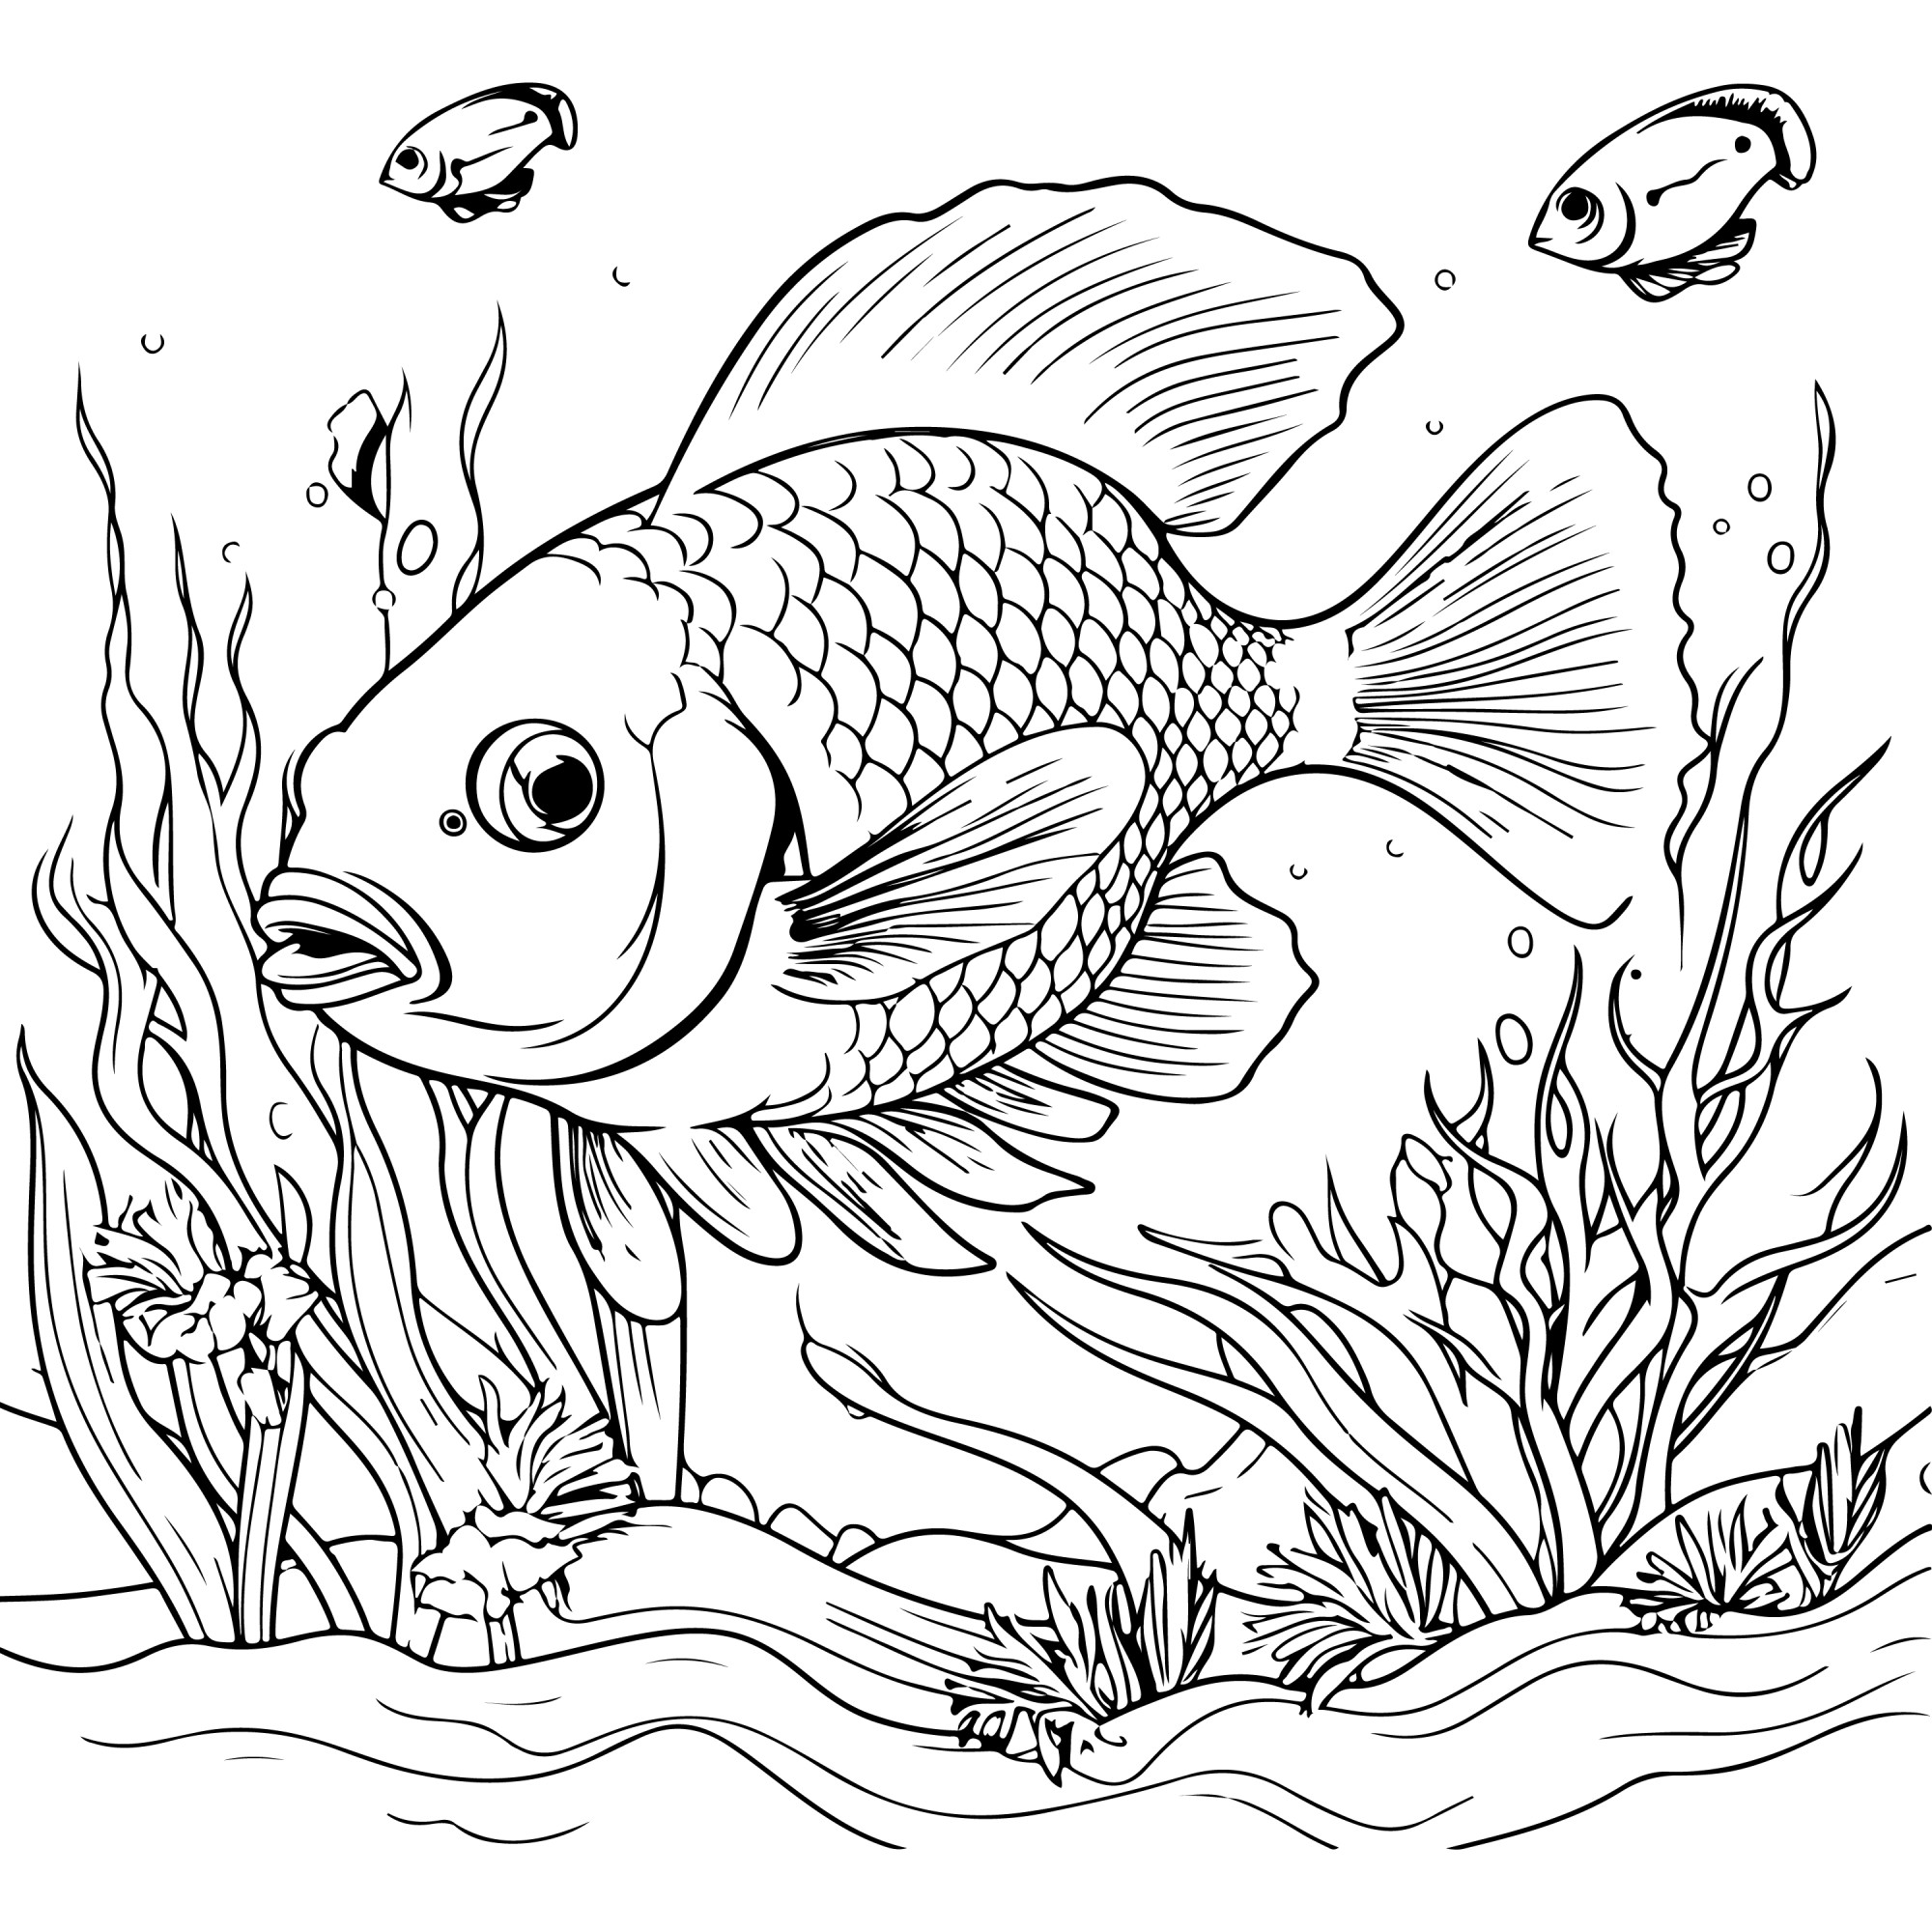 Раскраска для детей: рыба каваи